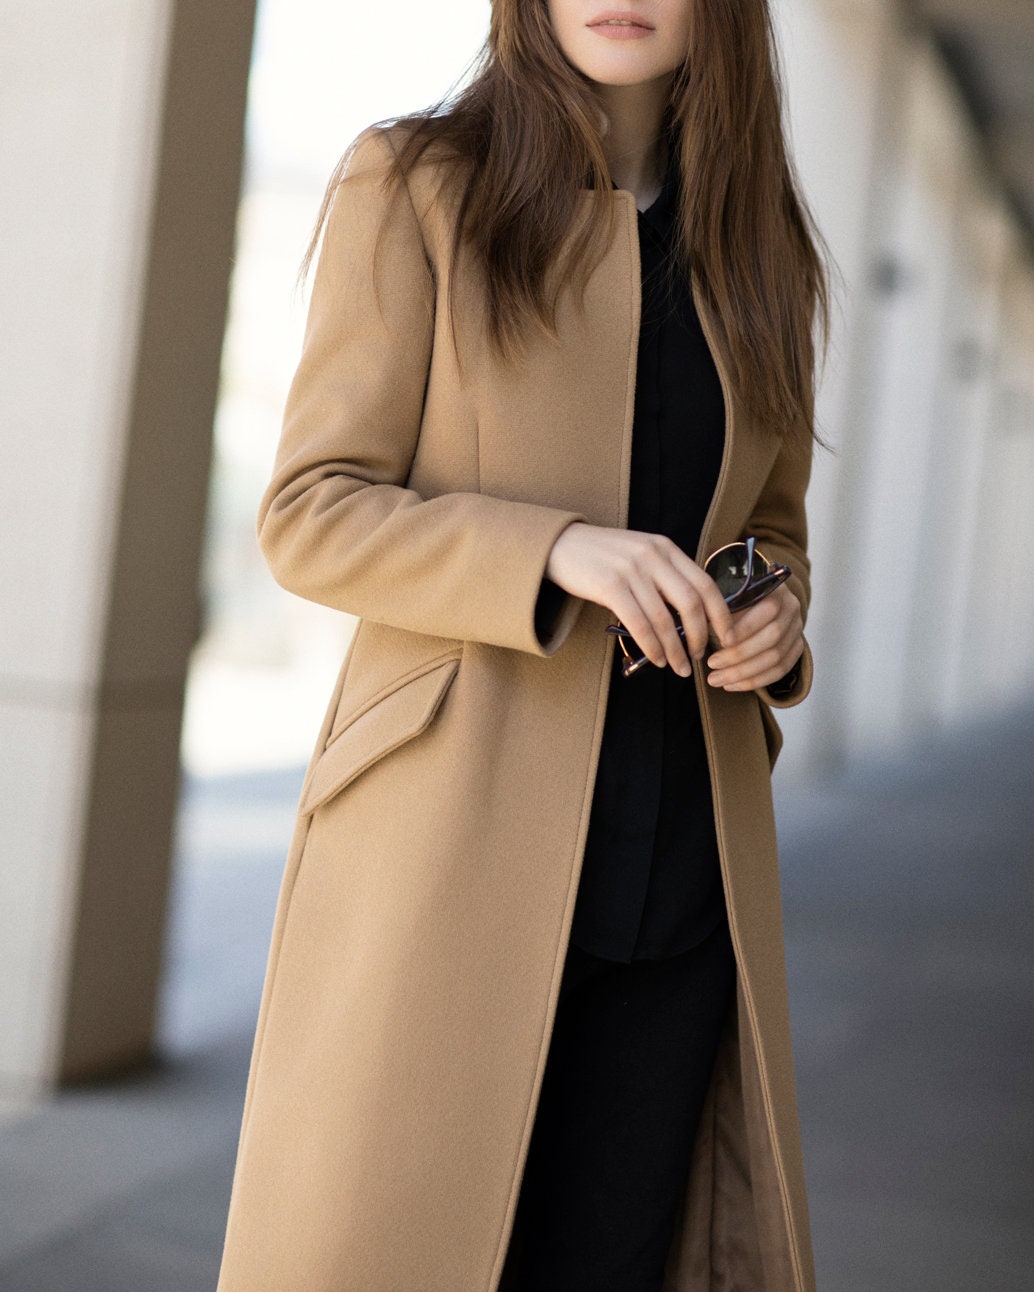 TRAFZA Autumn Fashion Womens Long Sleeve Camel Jackets Button